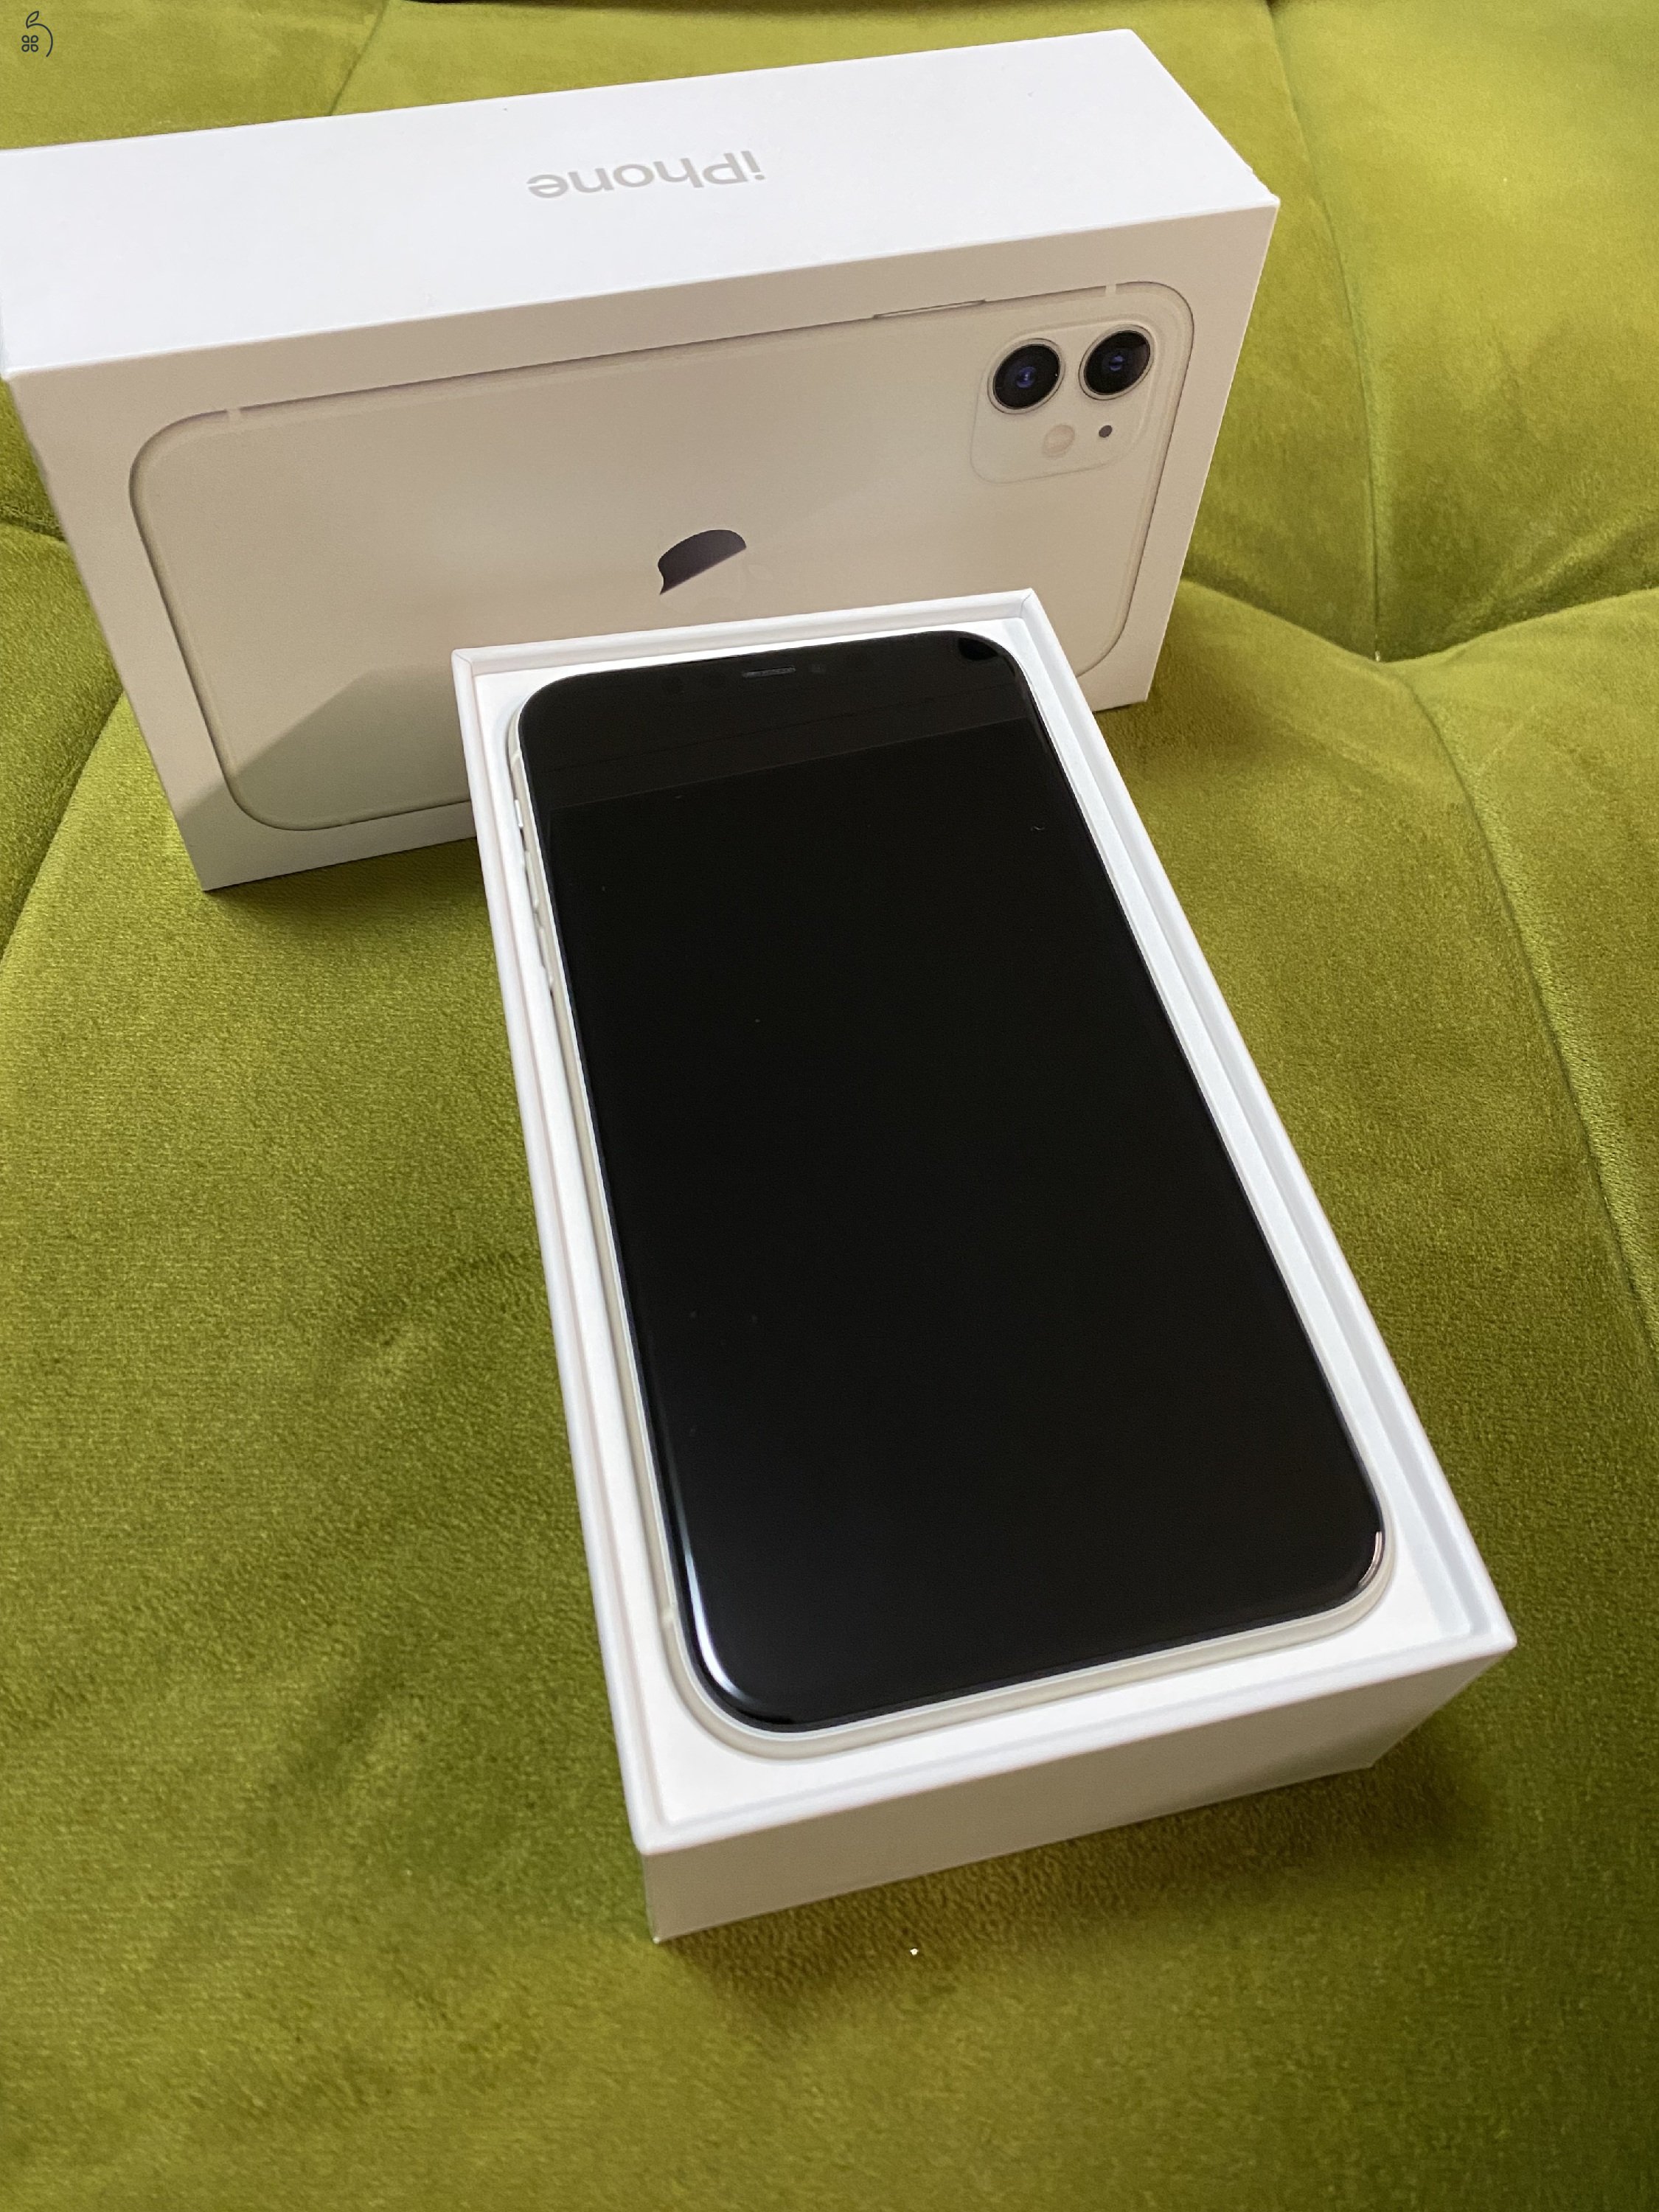 iPhone 11 white (64GB)